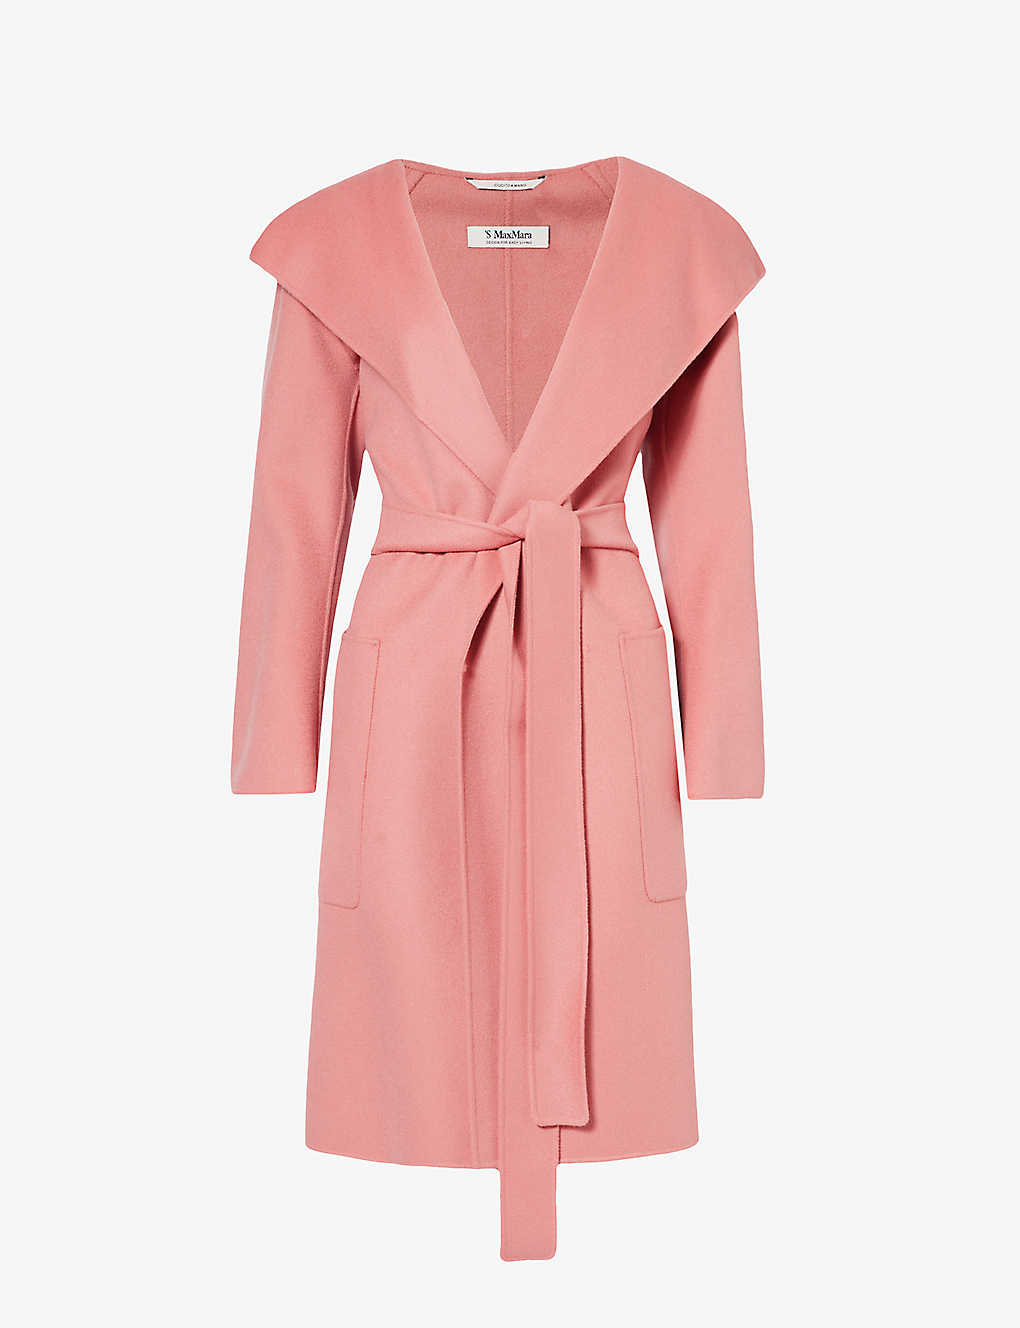 's Max Mara S Max Mara Womens Dark Pink Priscilla Belted Wool Coat